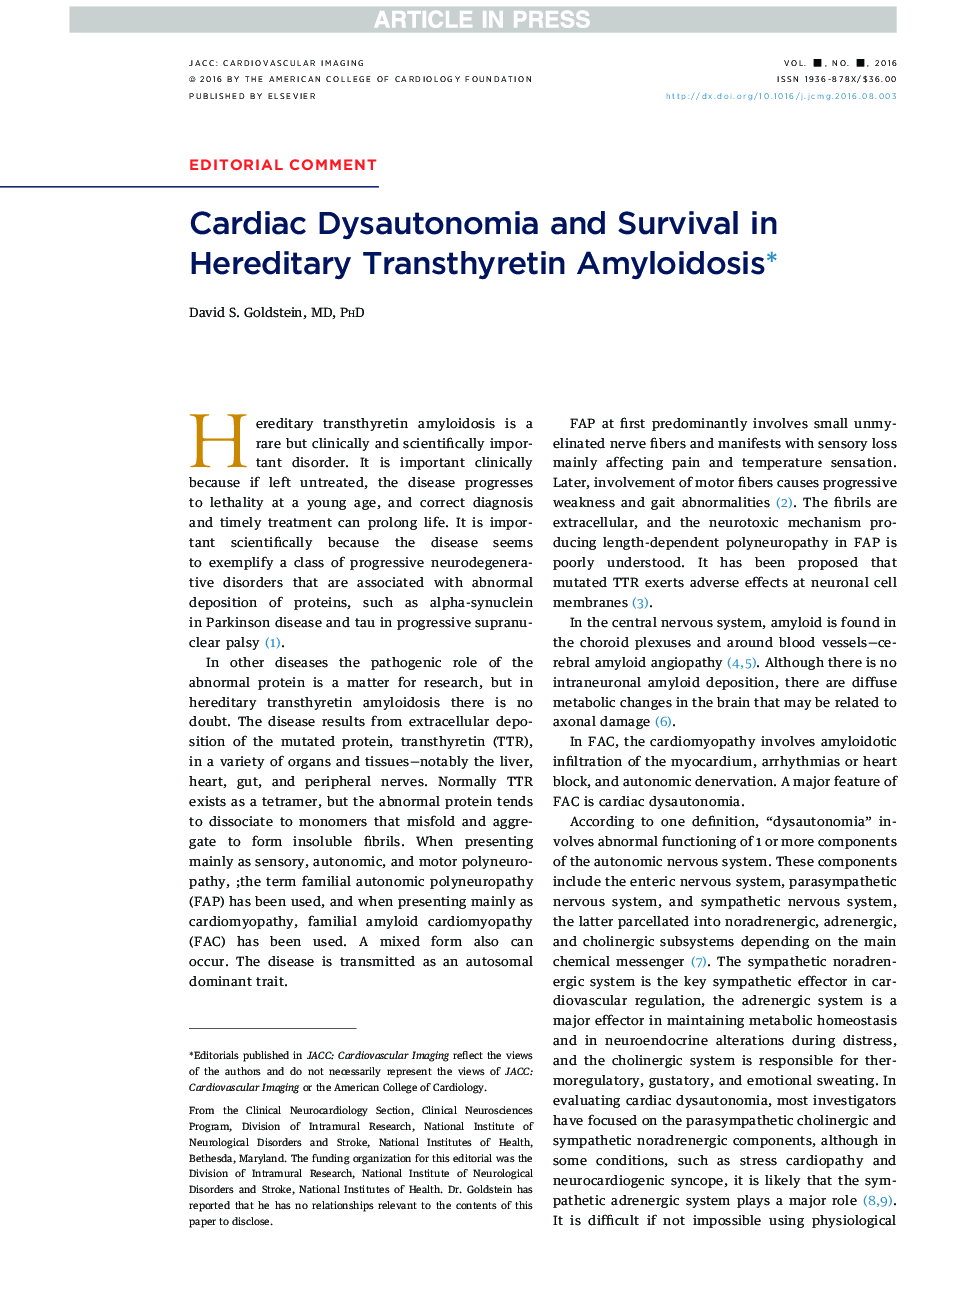 Cardiac Dysautonomia and Survival in Hereditary Transthyretin Amyloidosisâ